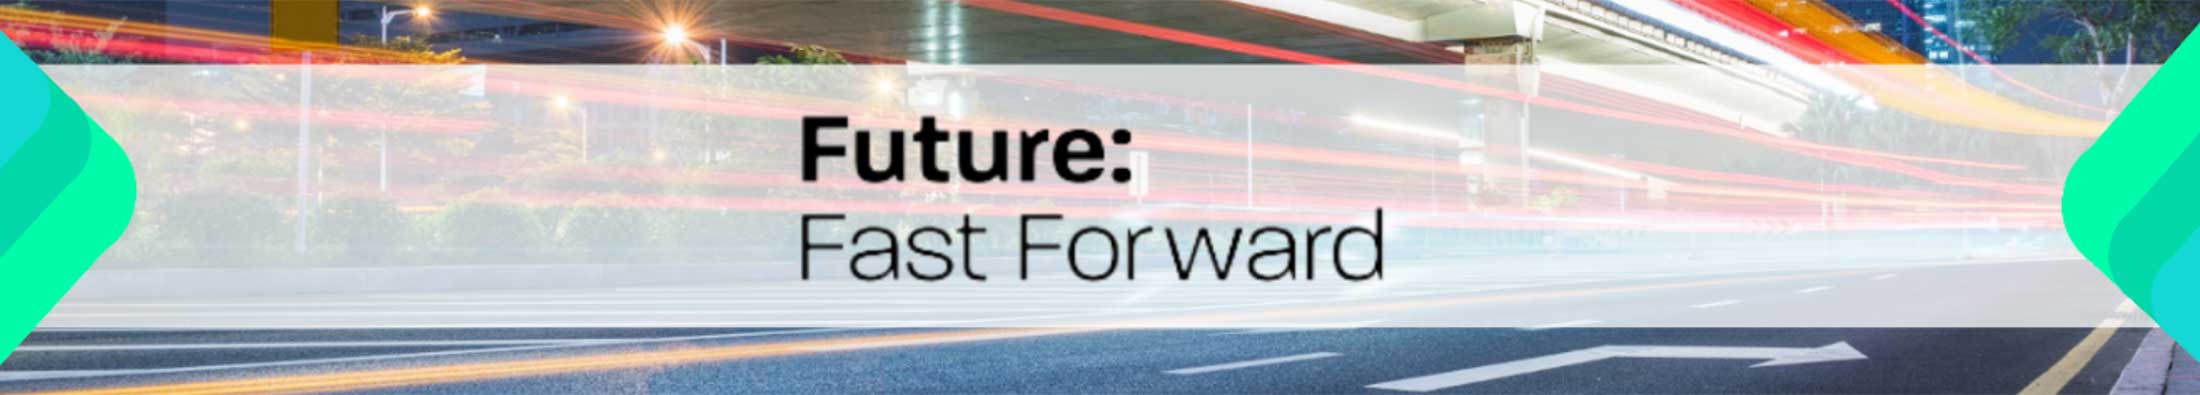 Future. Fast Forward banner